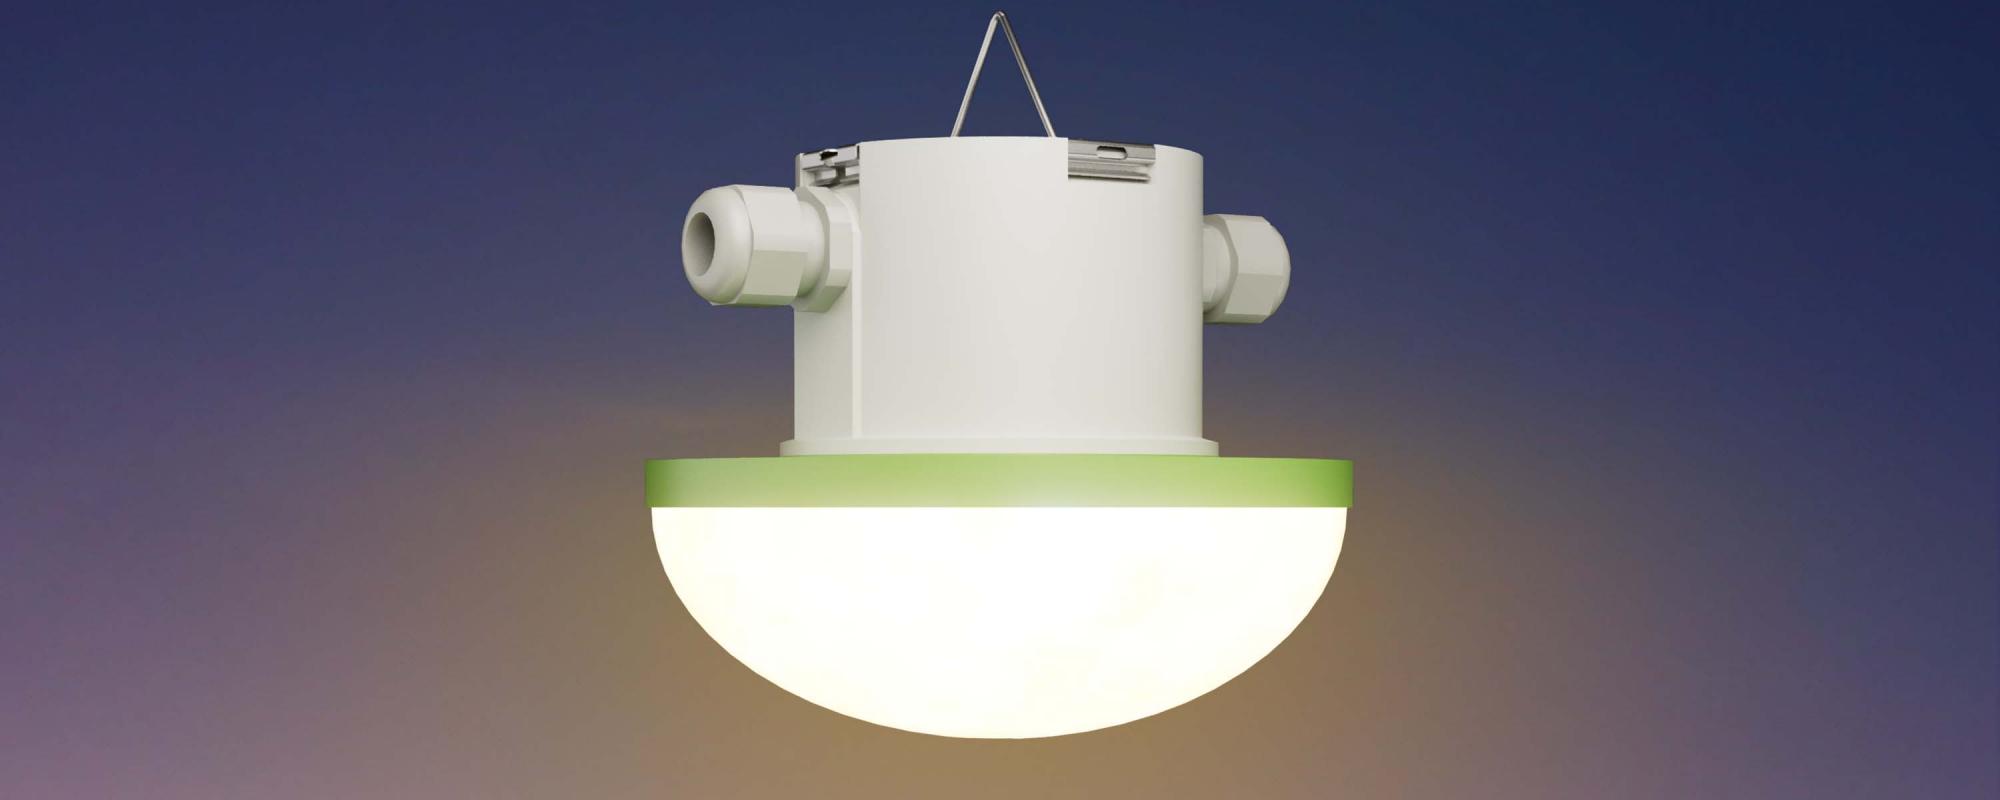 Fancom presents innovative lighting solutions